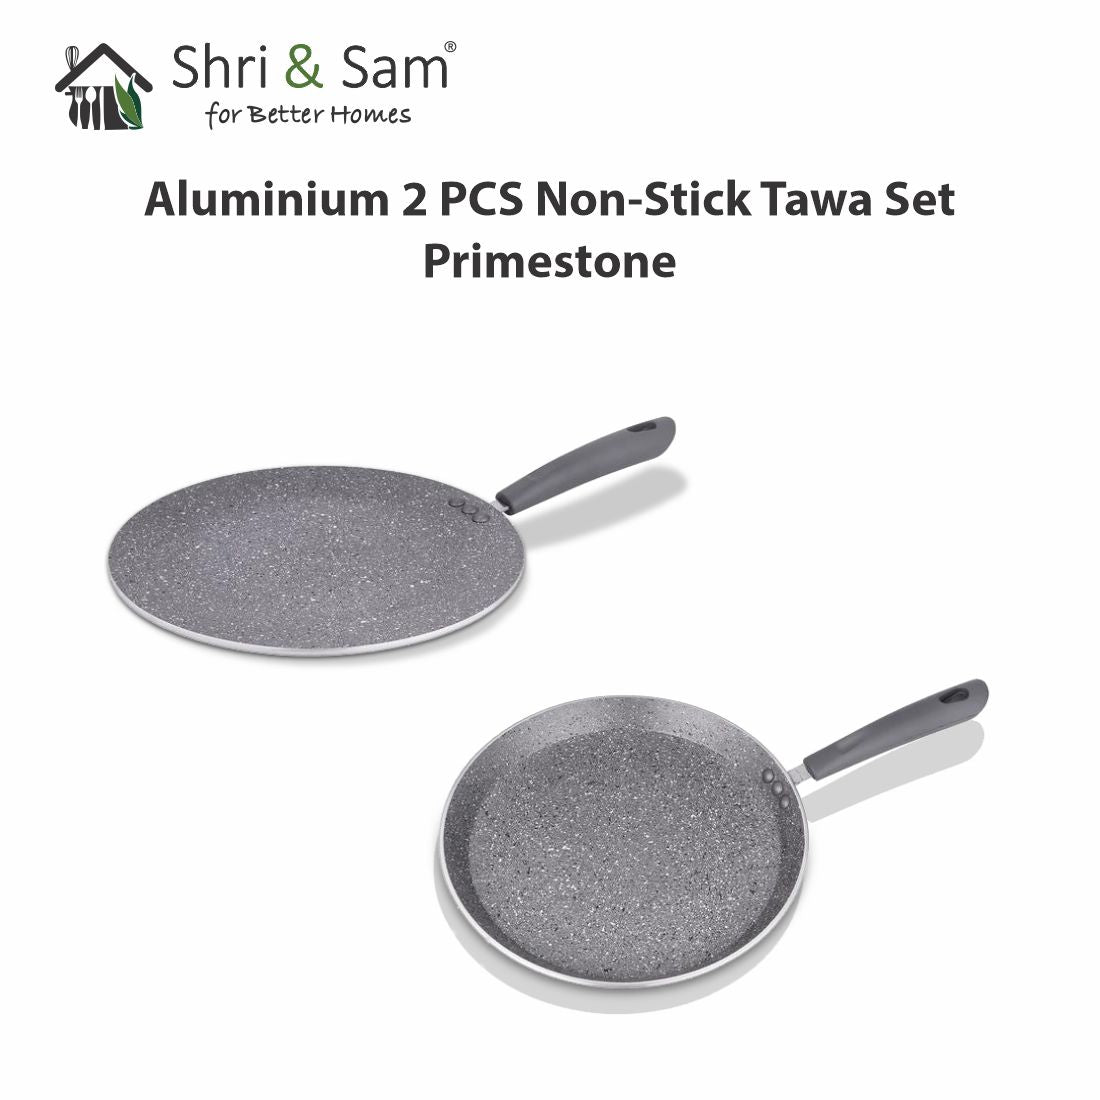 Aluminium 2 PCS Non-Stick Tawa Set Primestone